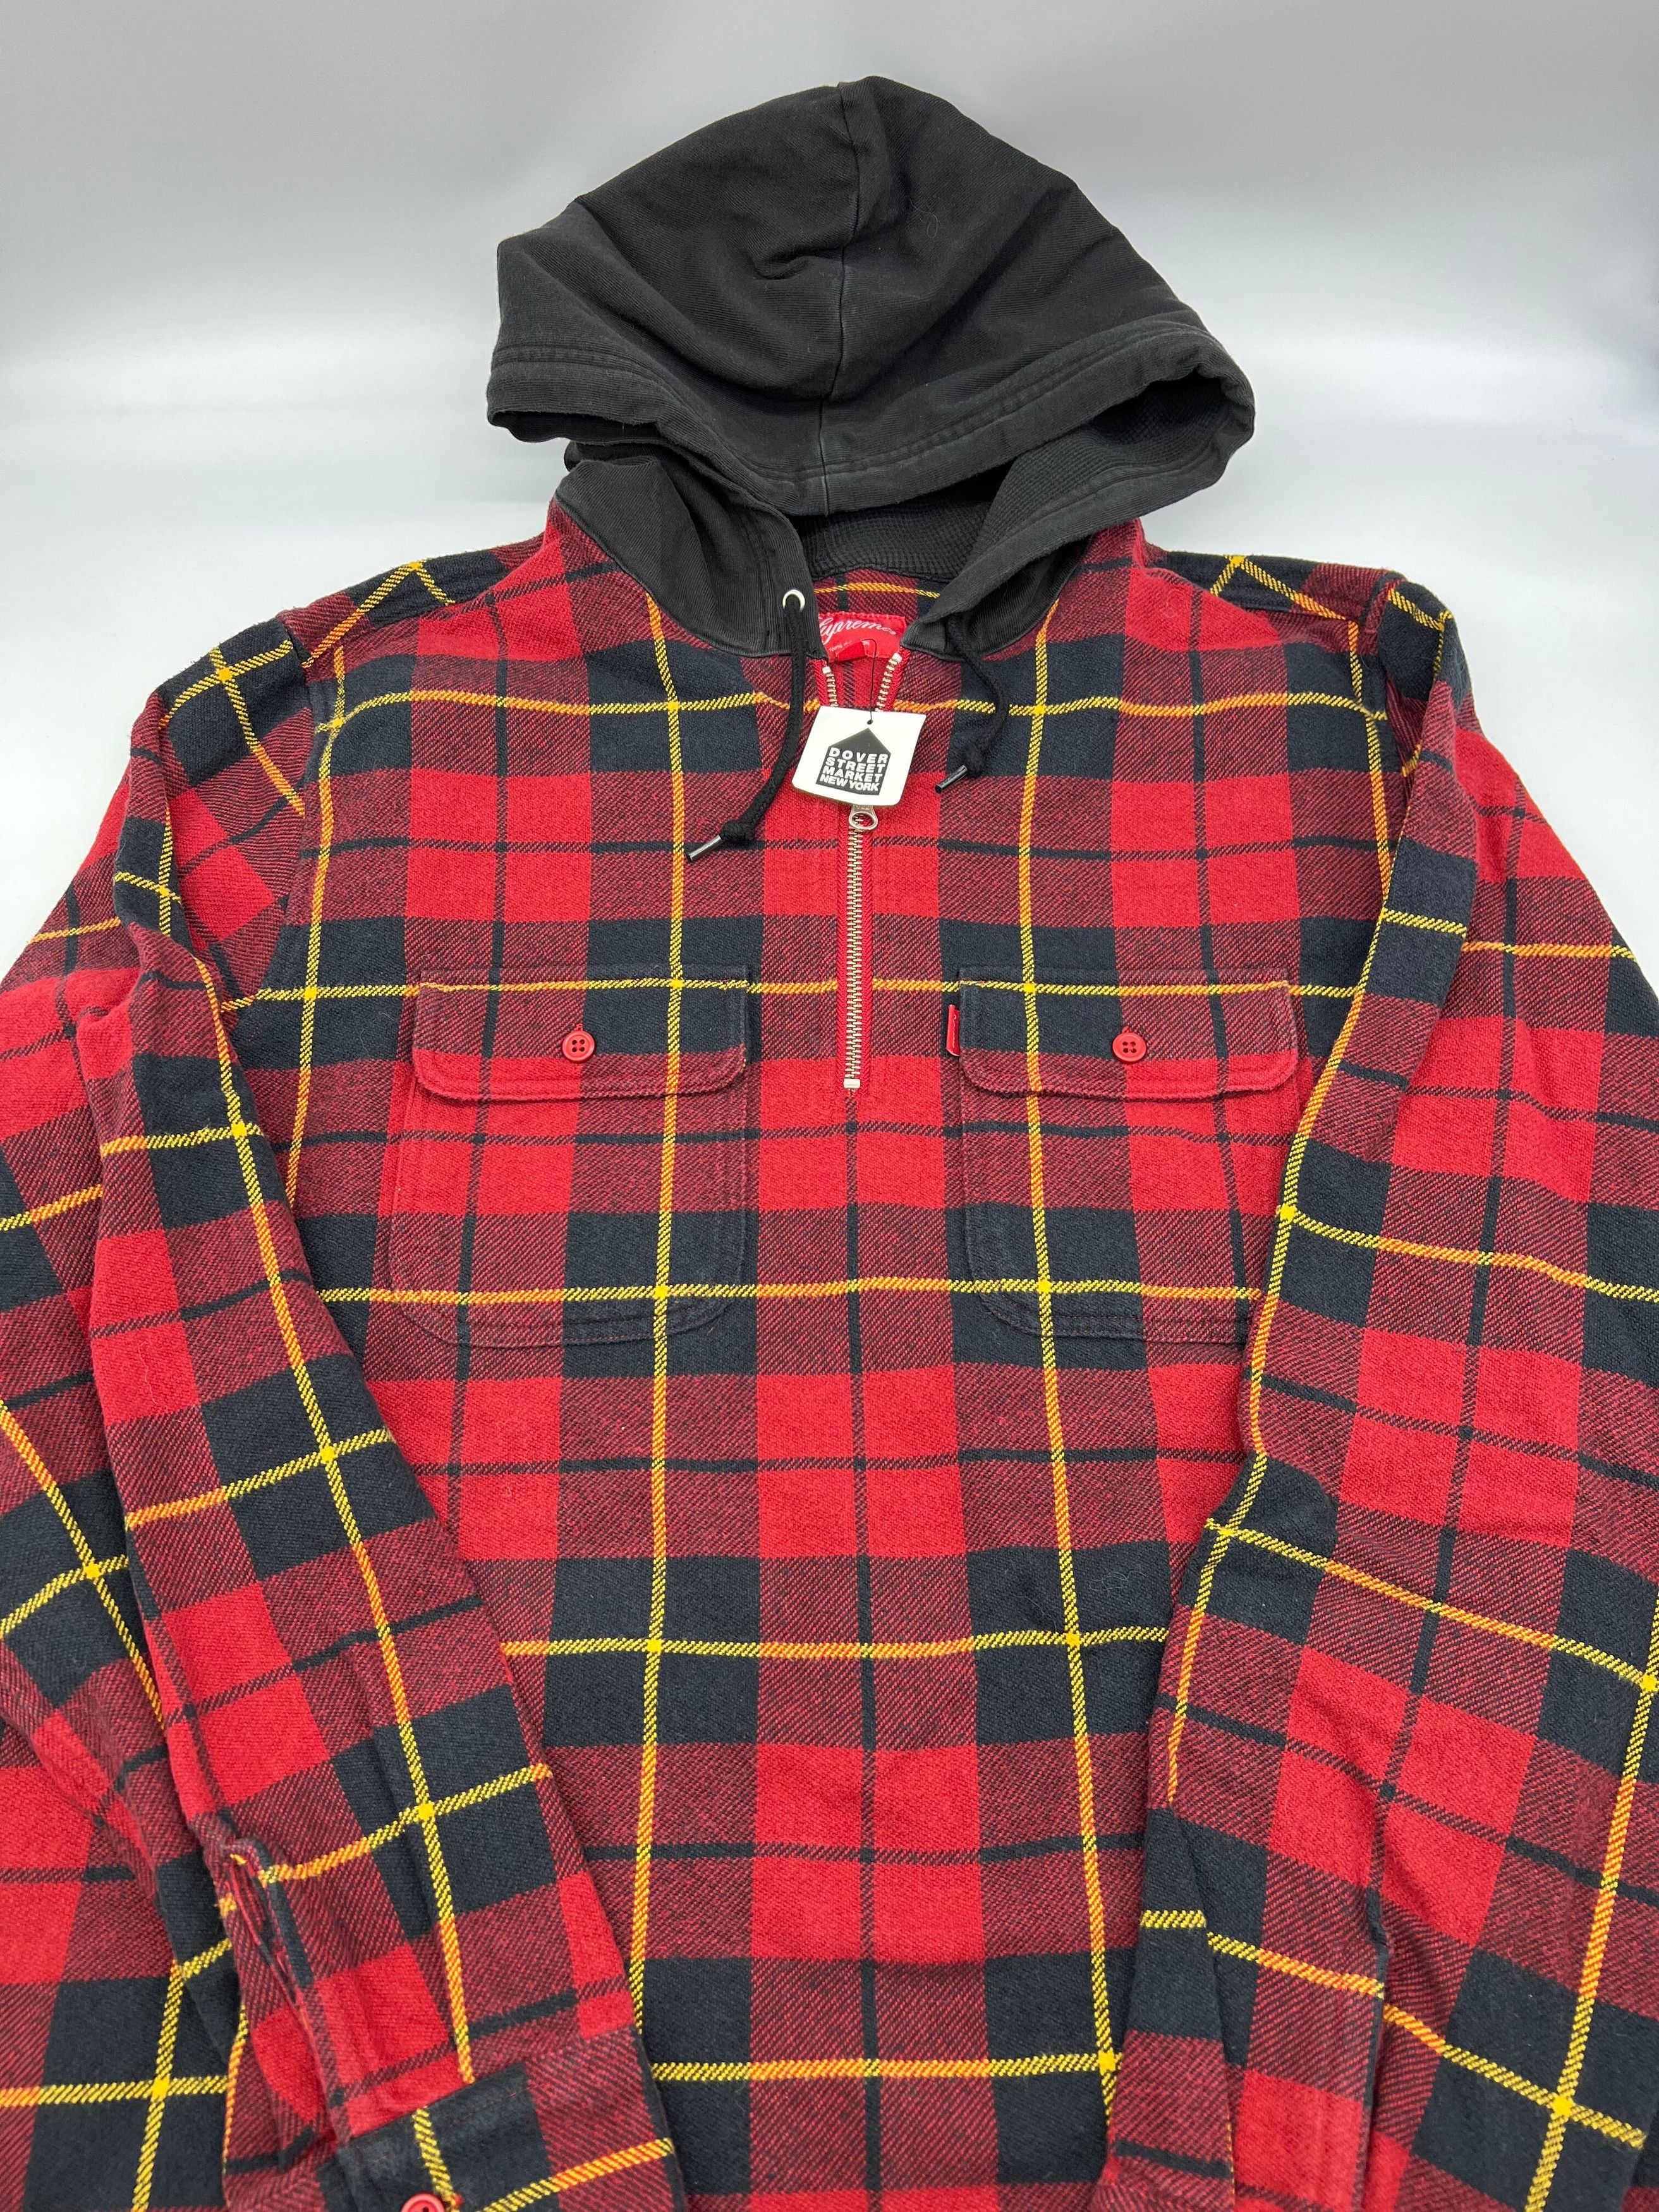 Supreme Hooded Plaid Half Zip Shirt | Grailed